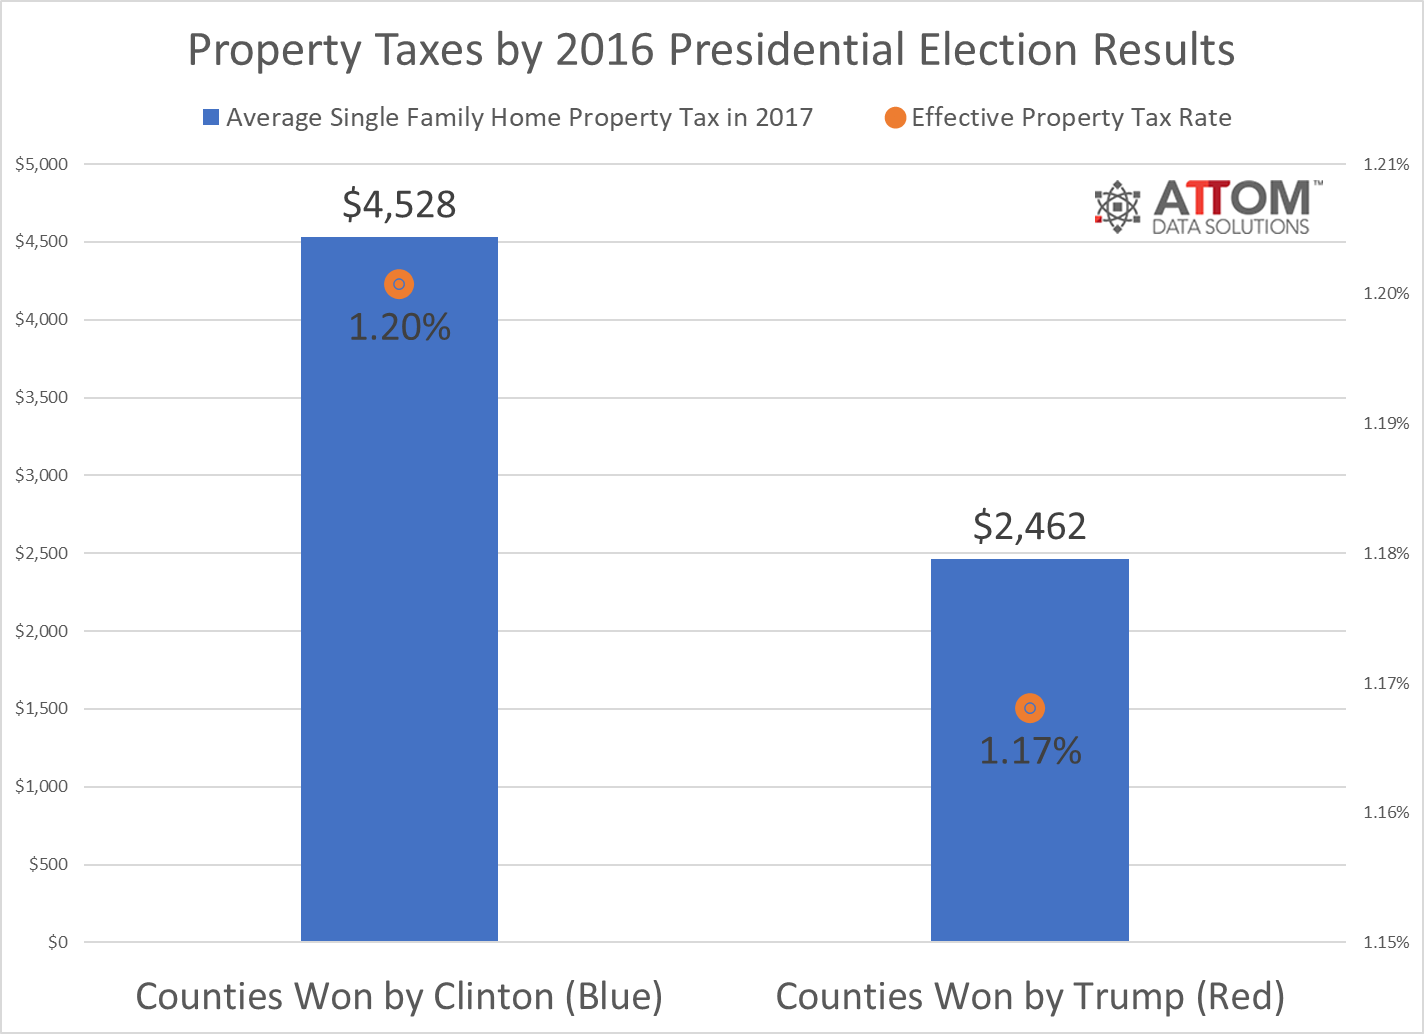 attom 2017 property tax data analysis 2